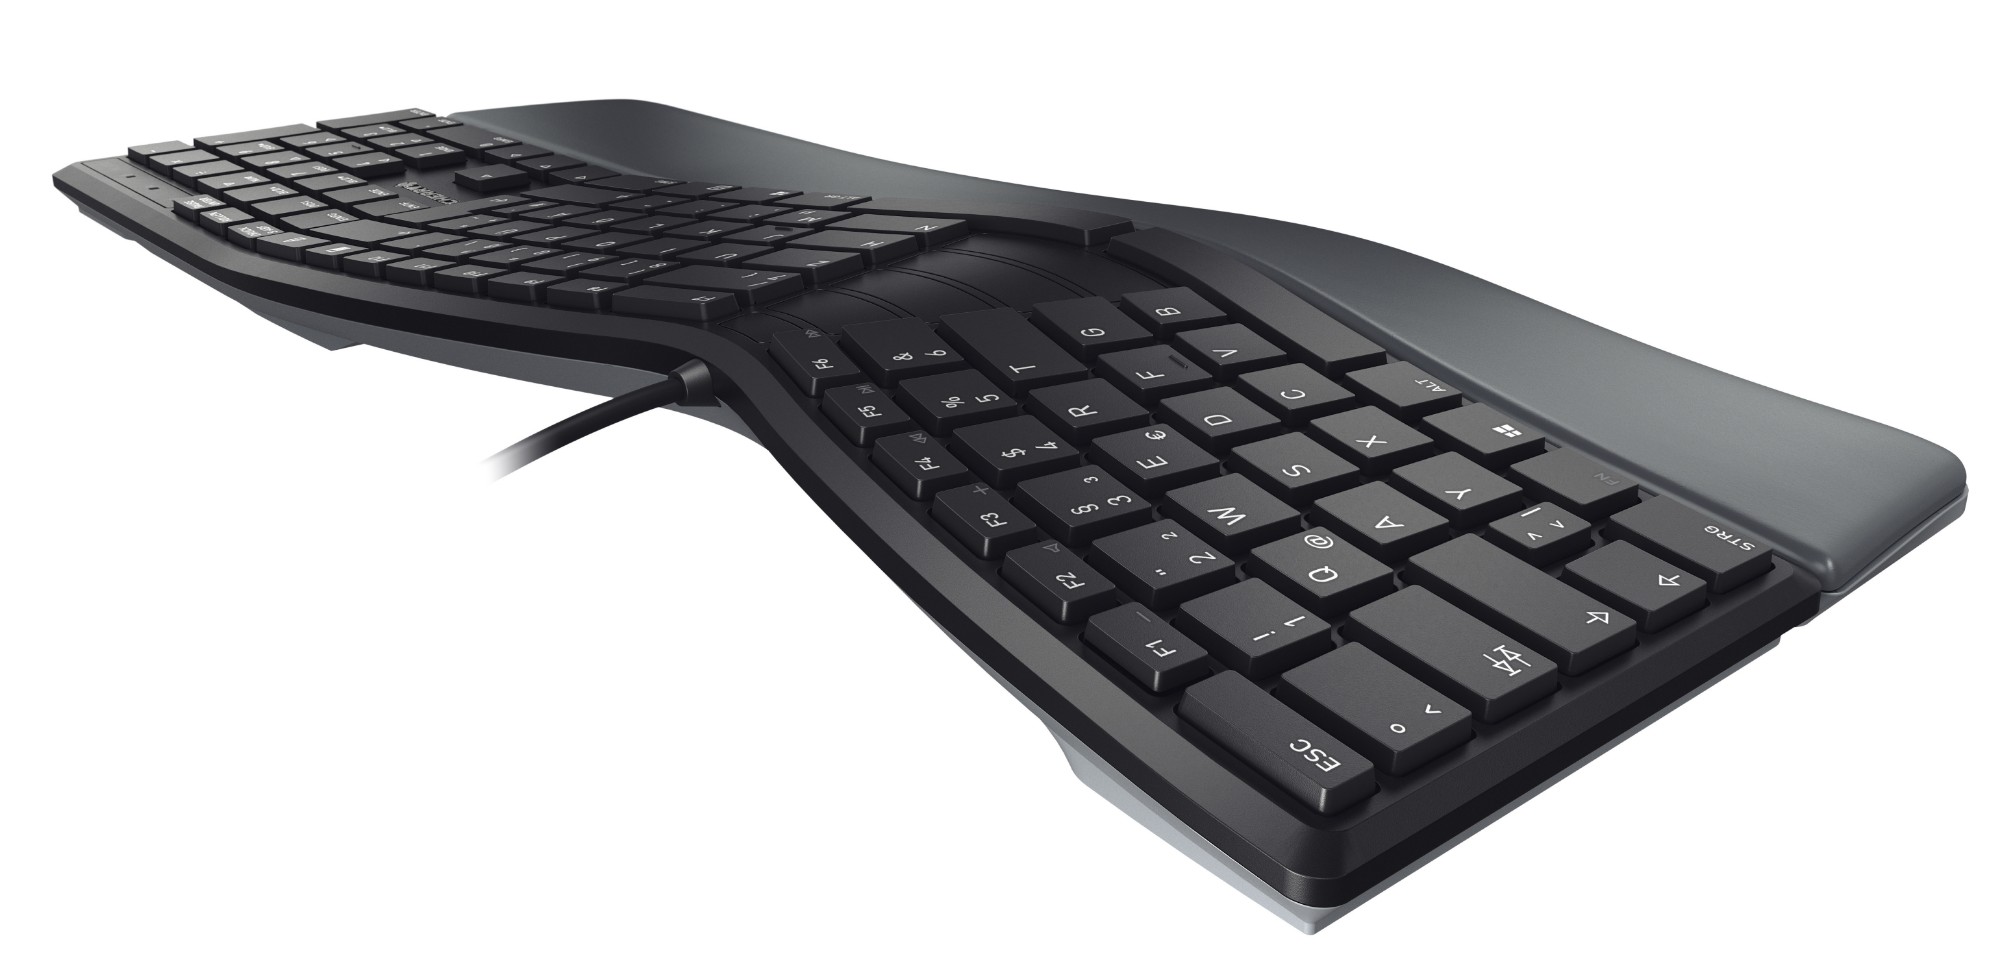 CHERRY KC 4500 ERGO keyboard USB QWERTY UK English Black